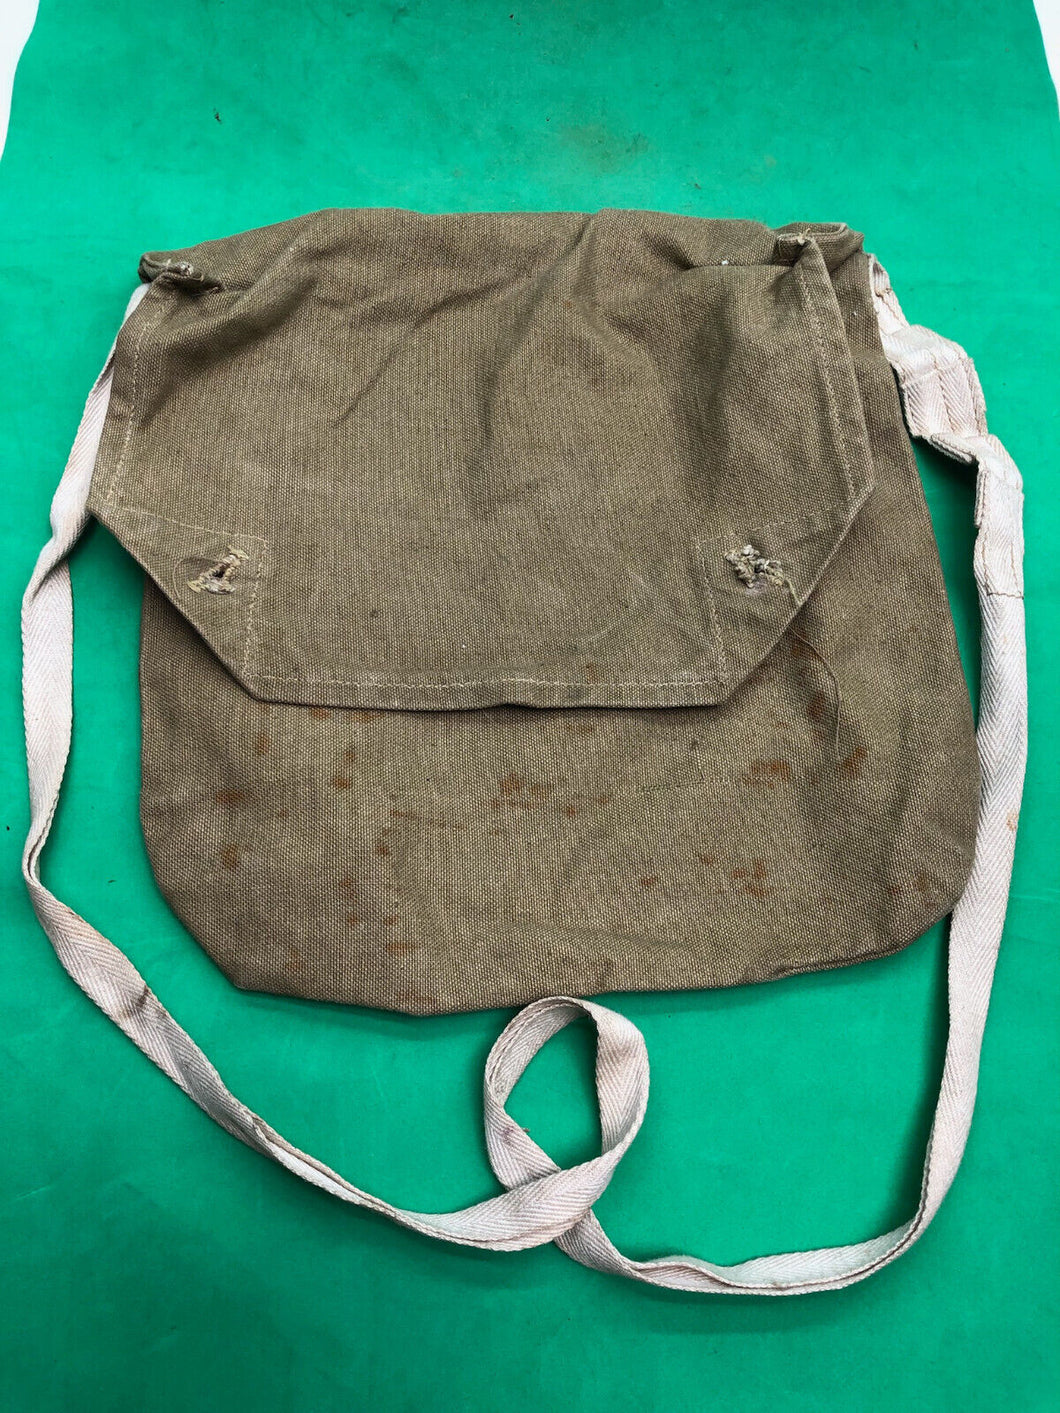 Original WW2 British Army / Home Front / Civil Defence Gas Mask Bag 1941